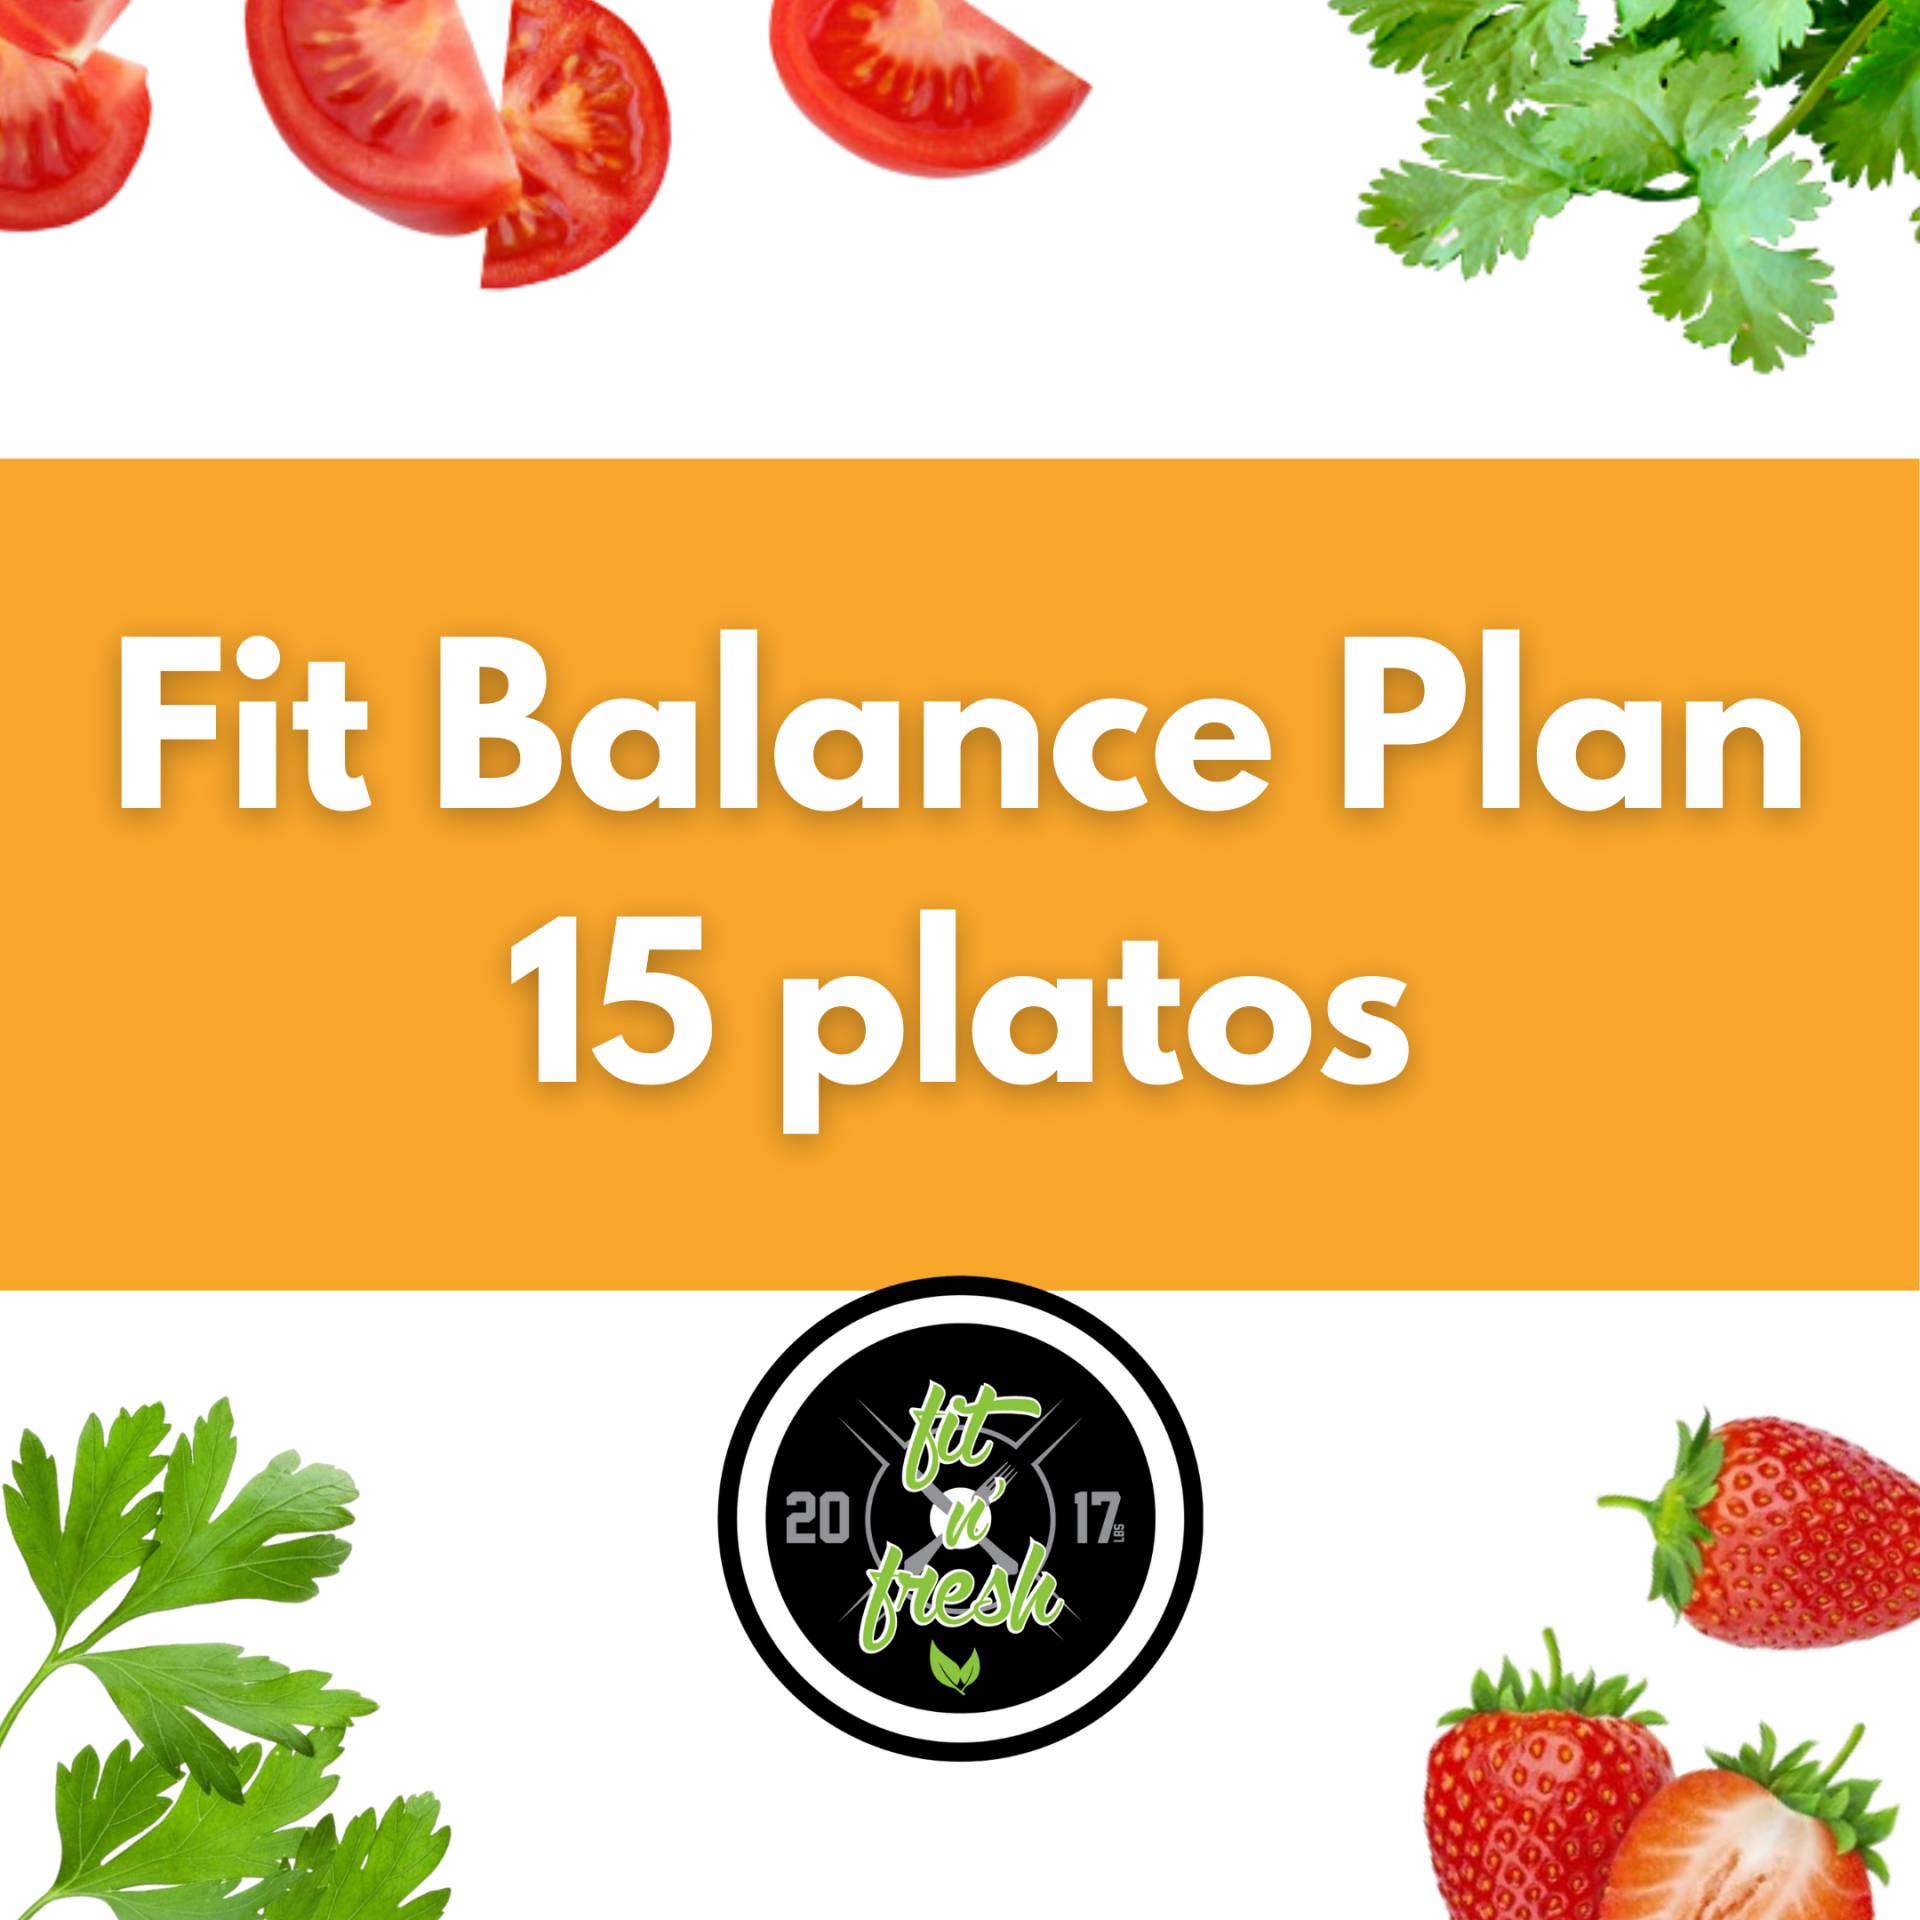 Fit Balance Plan - 15 Platos